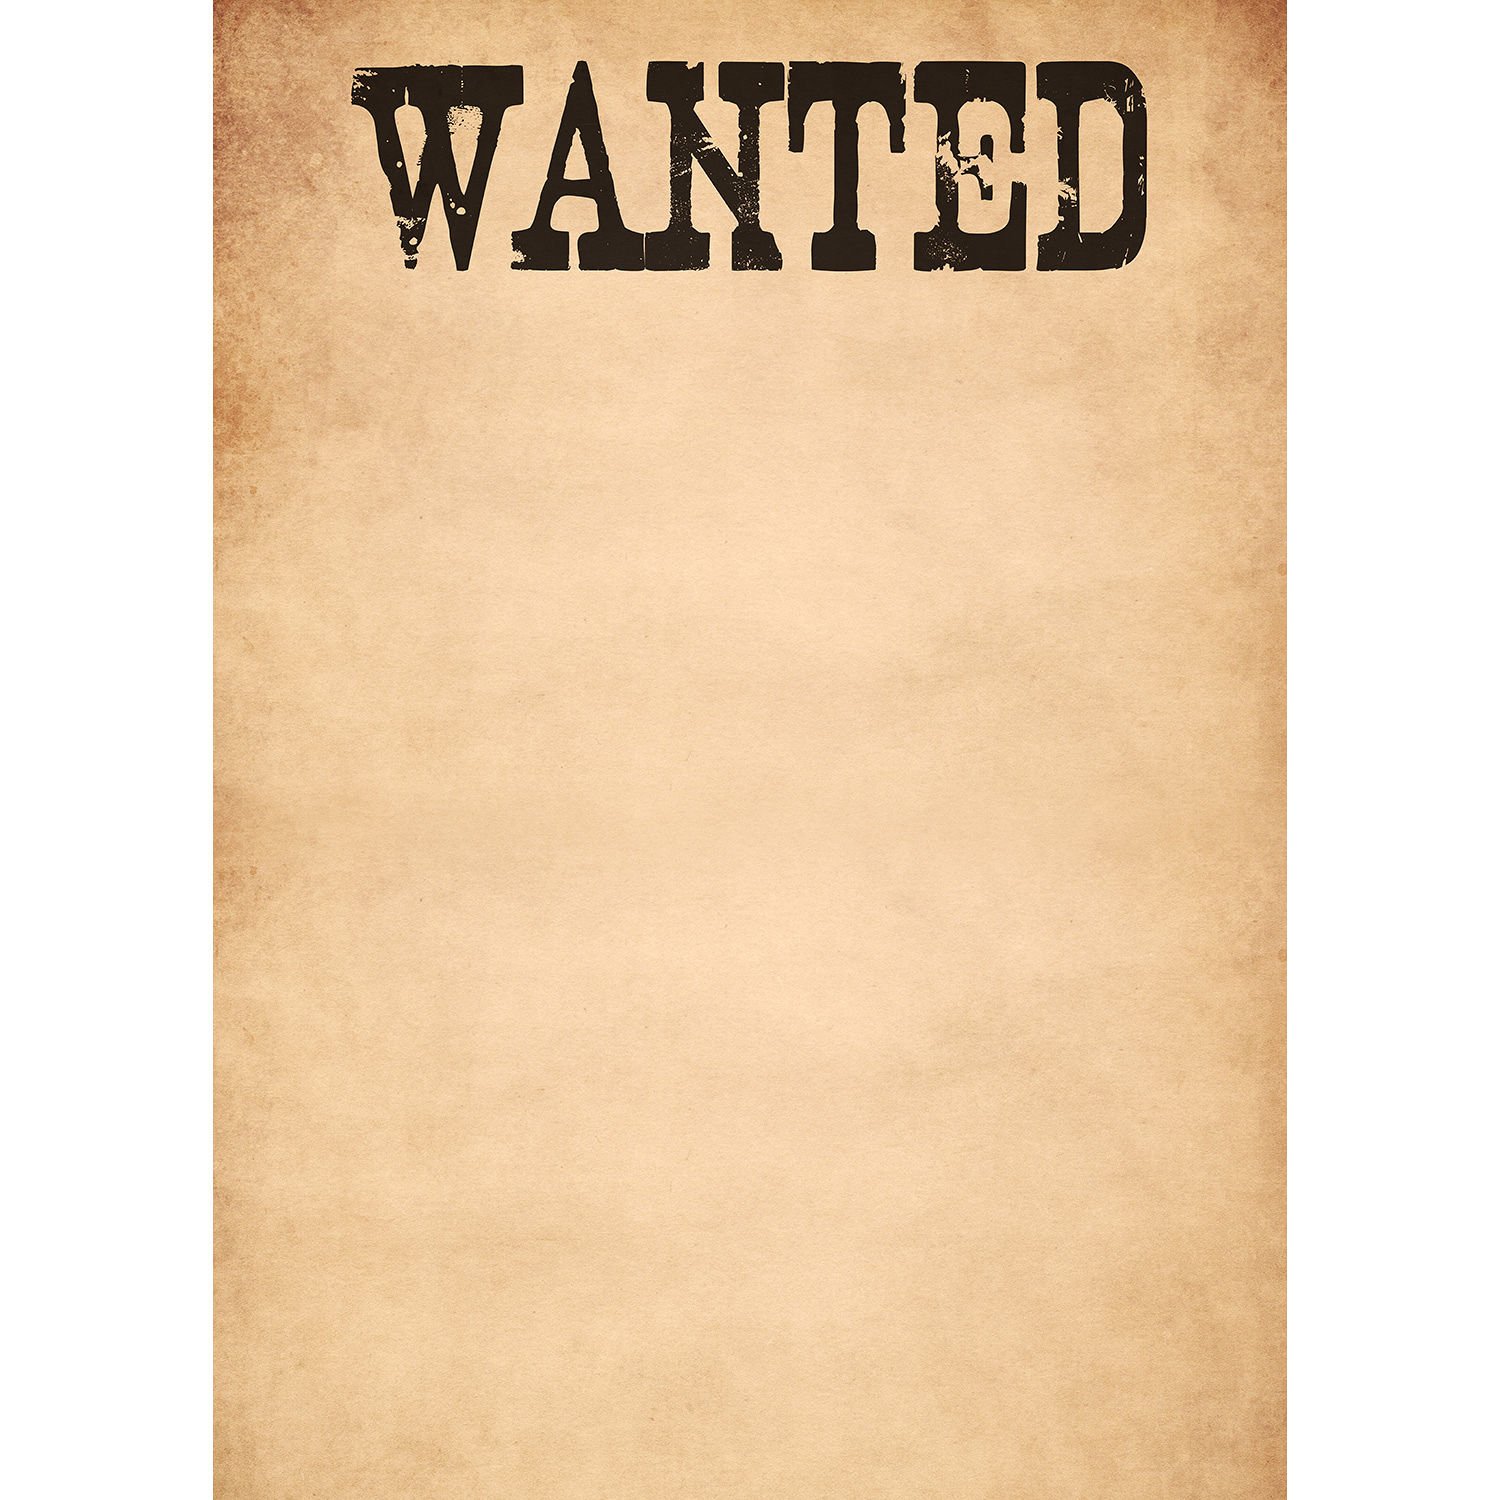 Lived talked wanted. Wanted плакат. Плакат разыскивается. Листовка разыскивается. Рамка wanted.